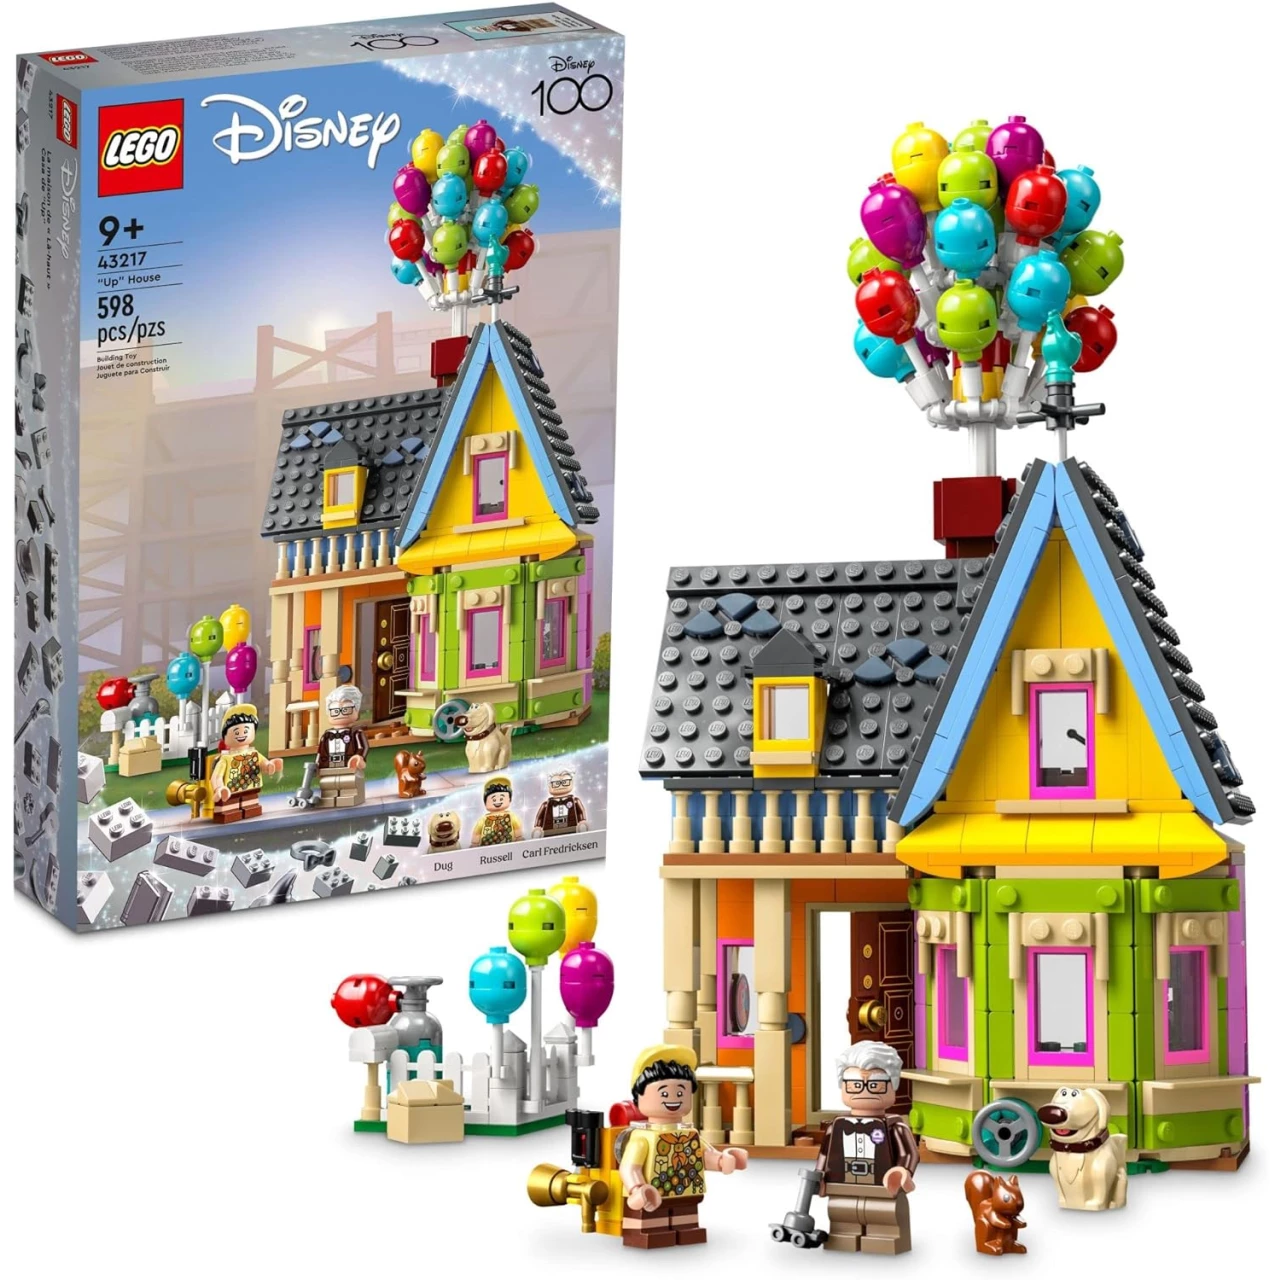 LEGO Disney and Pixar ‘Up’ House 43217 Disney 100 Anniversary Celebration Building Toy